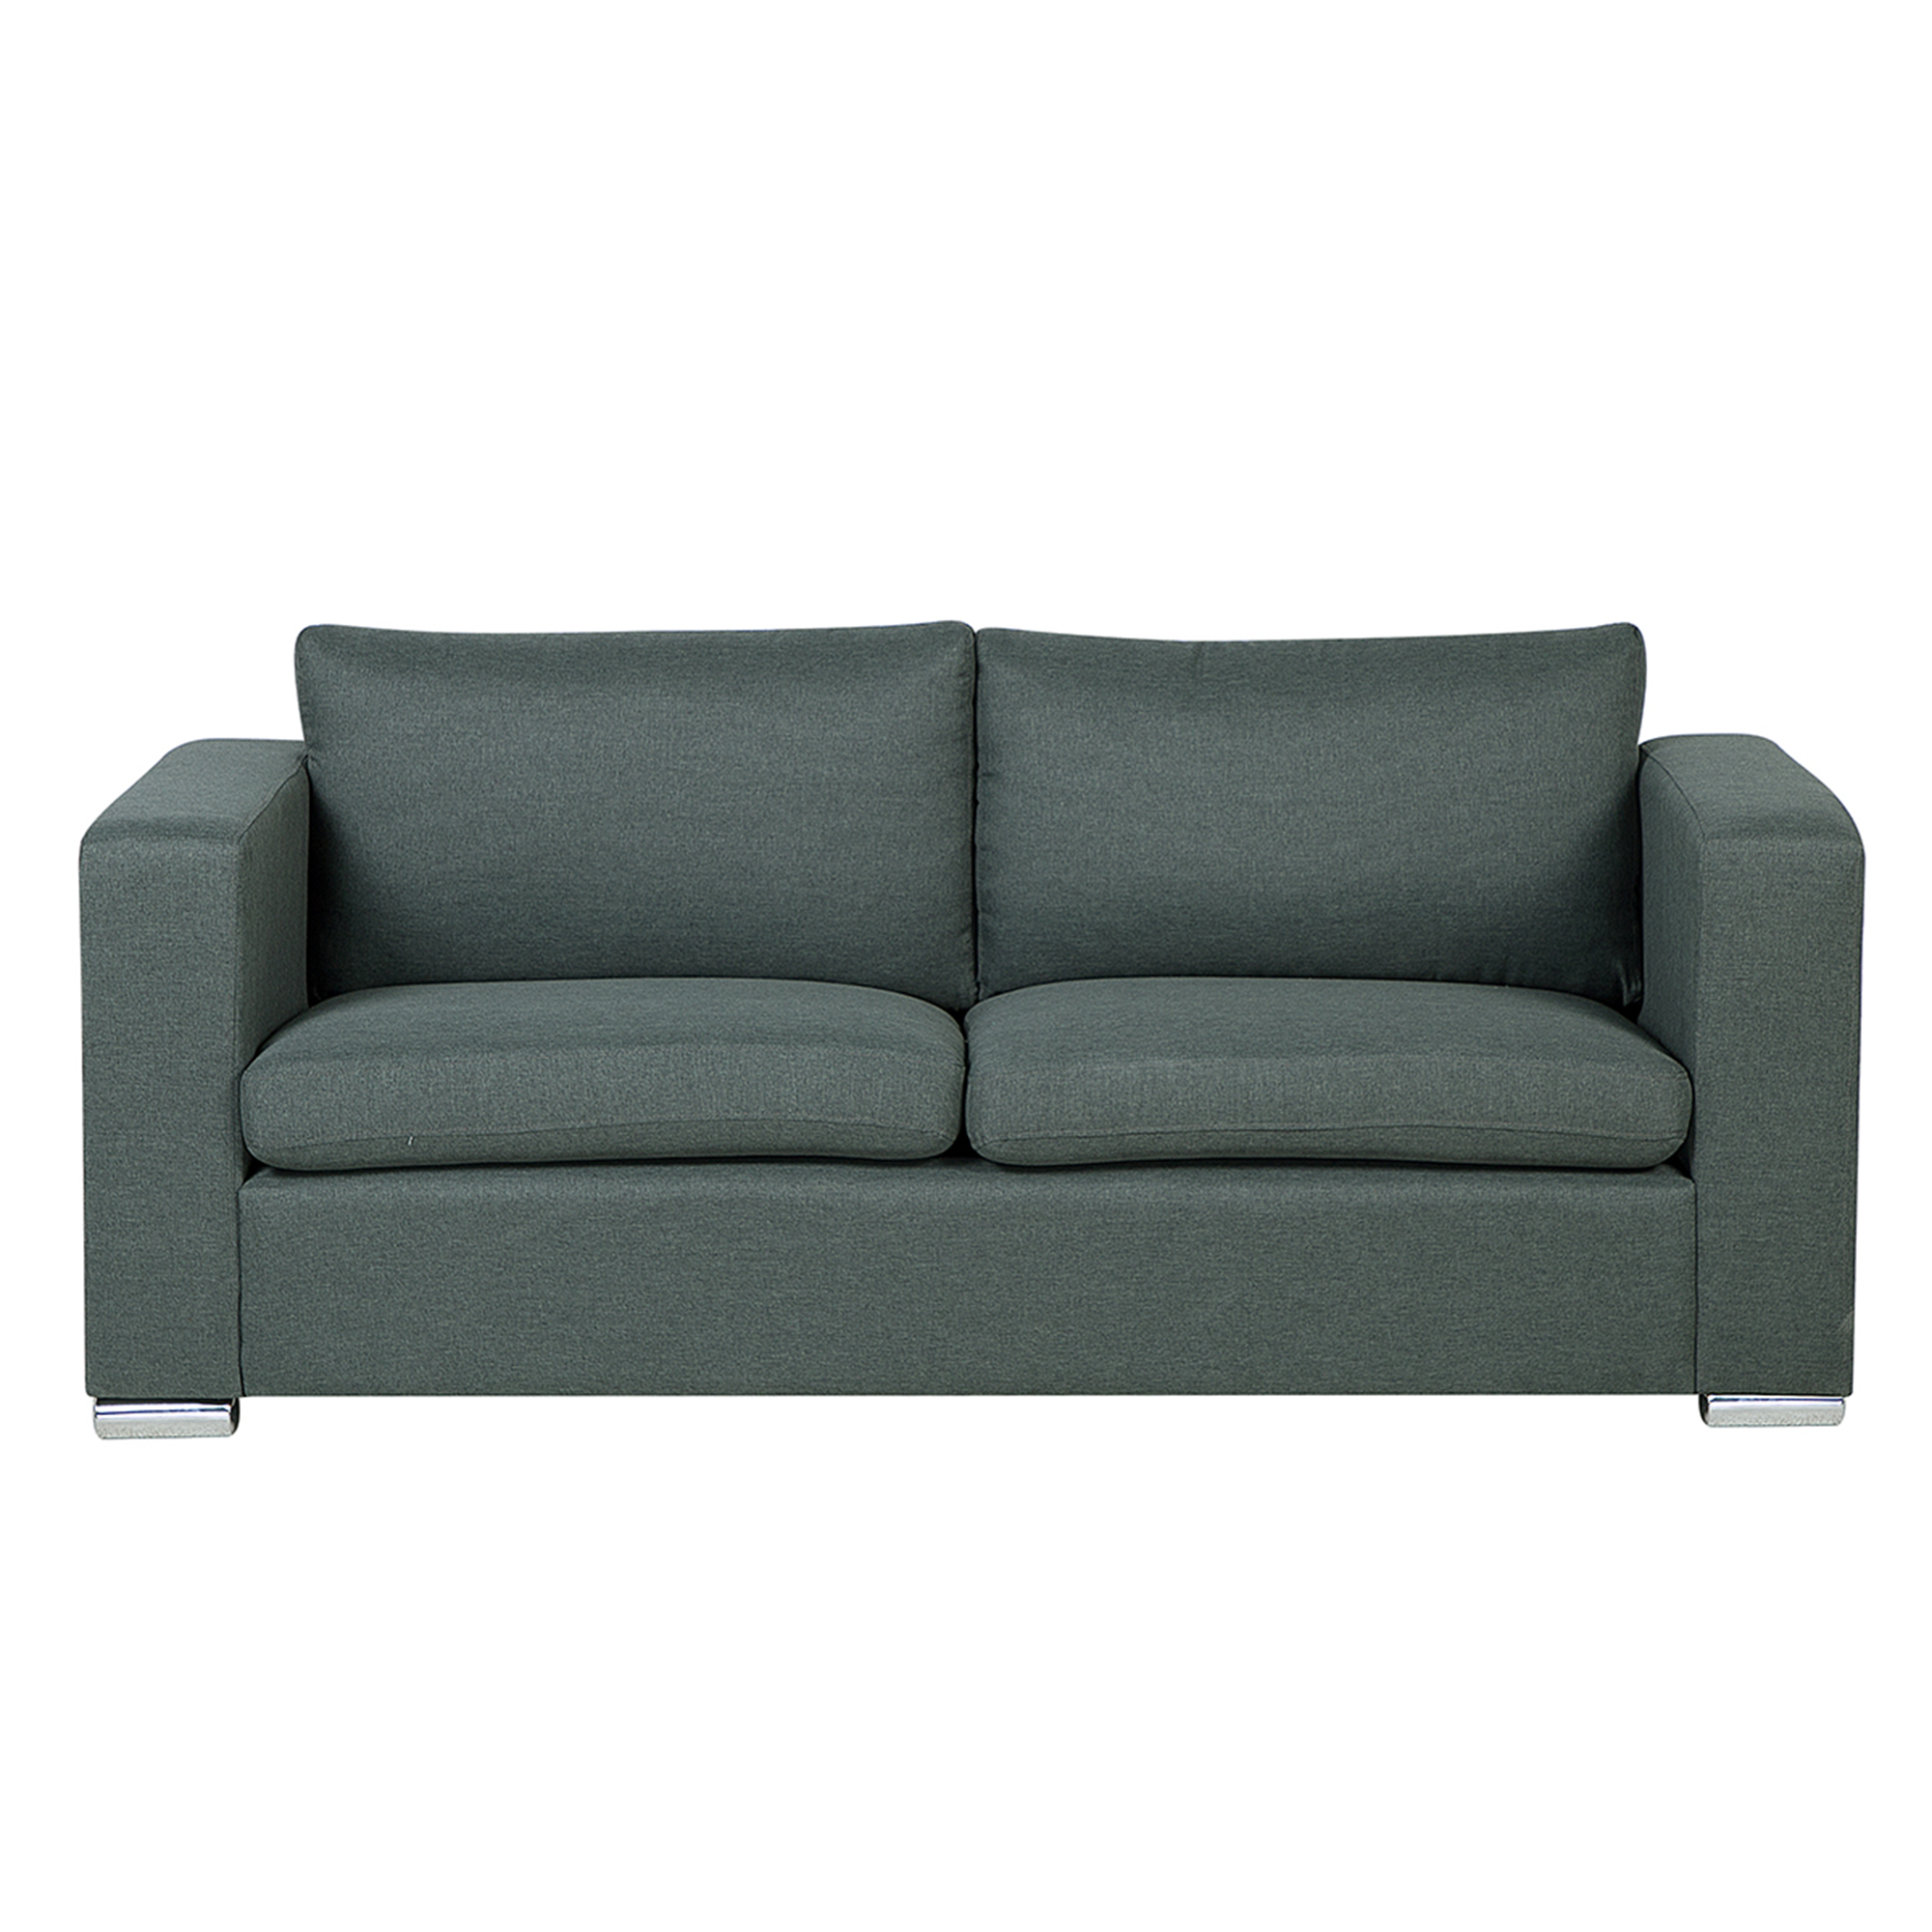 Beliani 3 Seater Sofa Grey Genuine Leather Upholstery Chromed Legs Retro Design